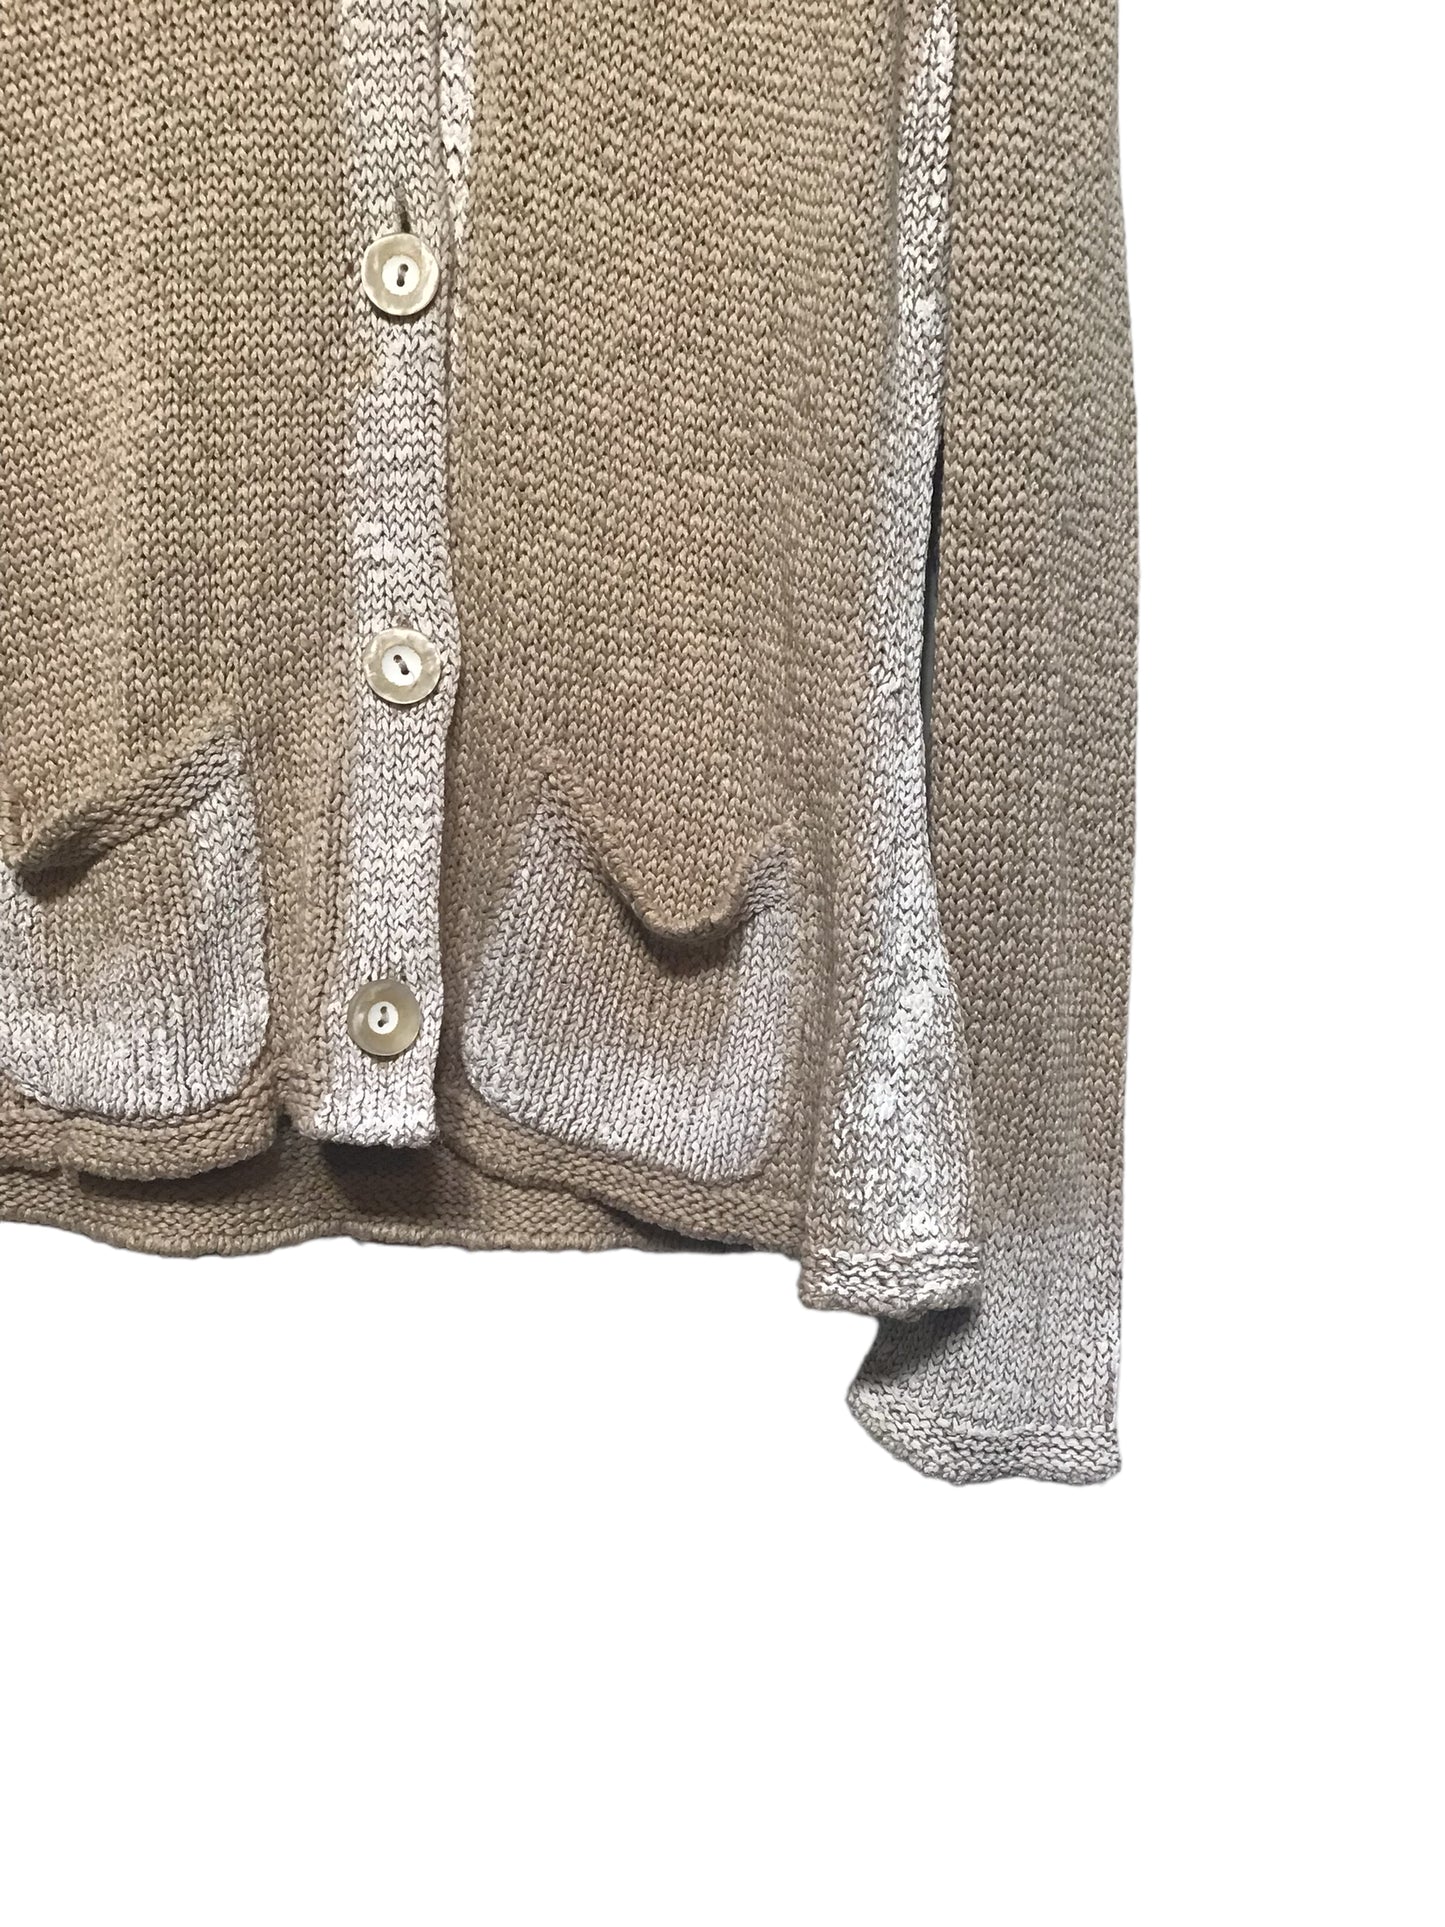 Zucchero Knitted Cardigan (Size Medium)